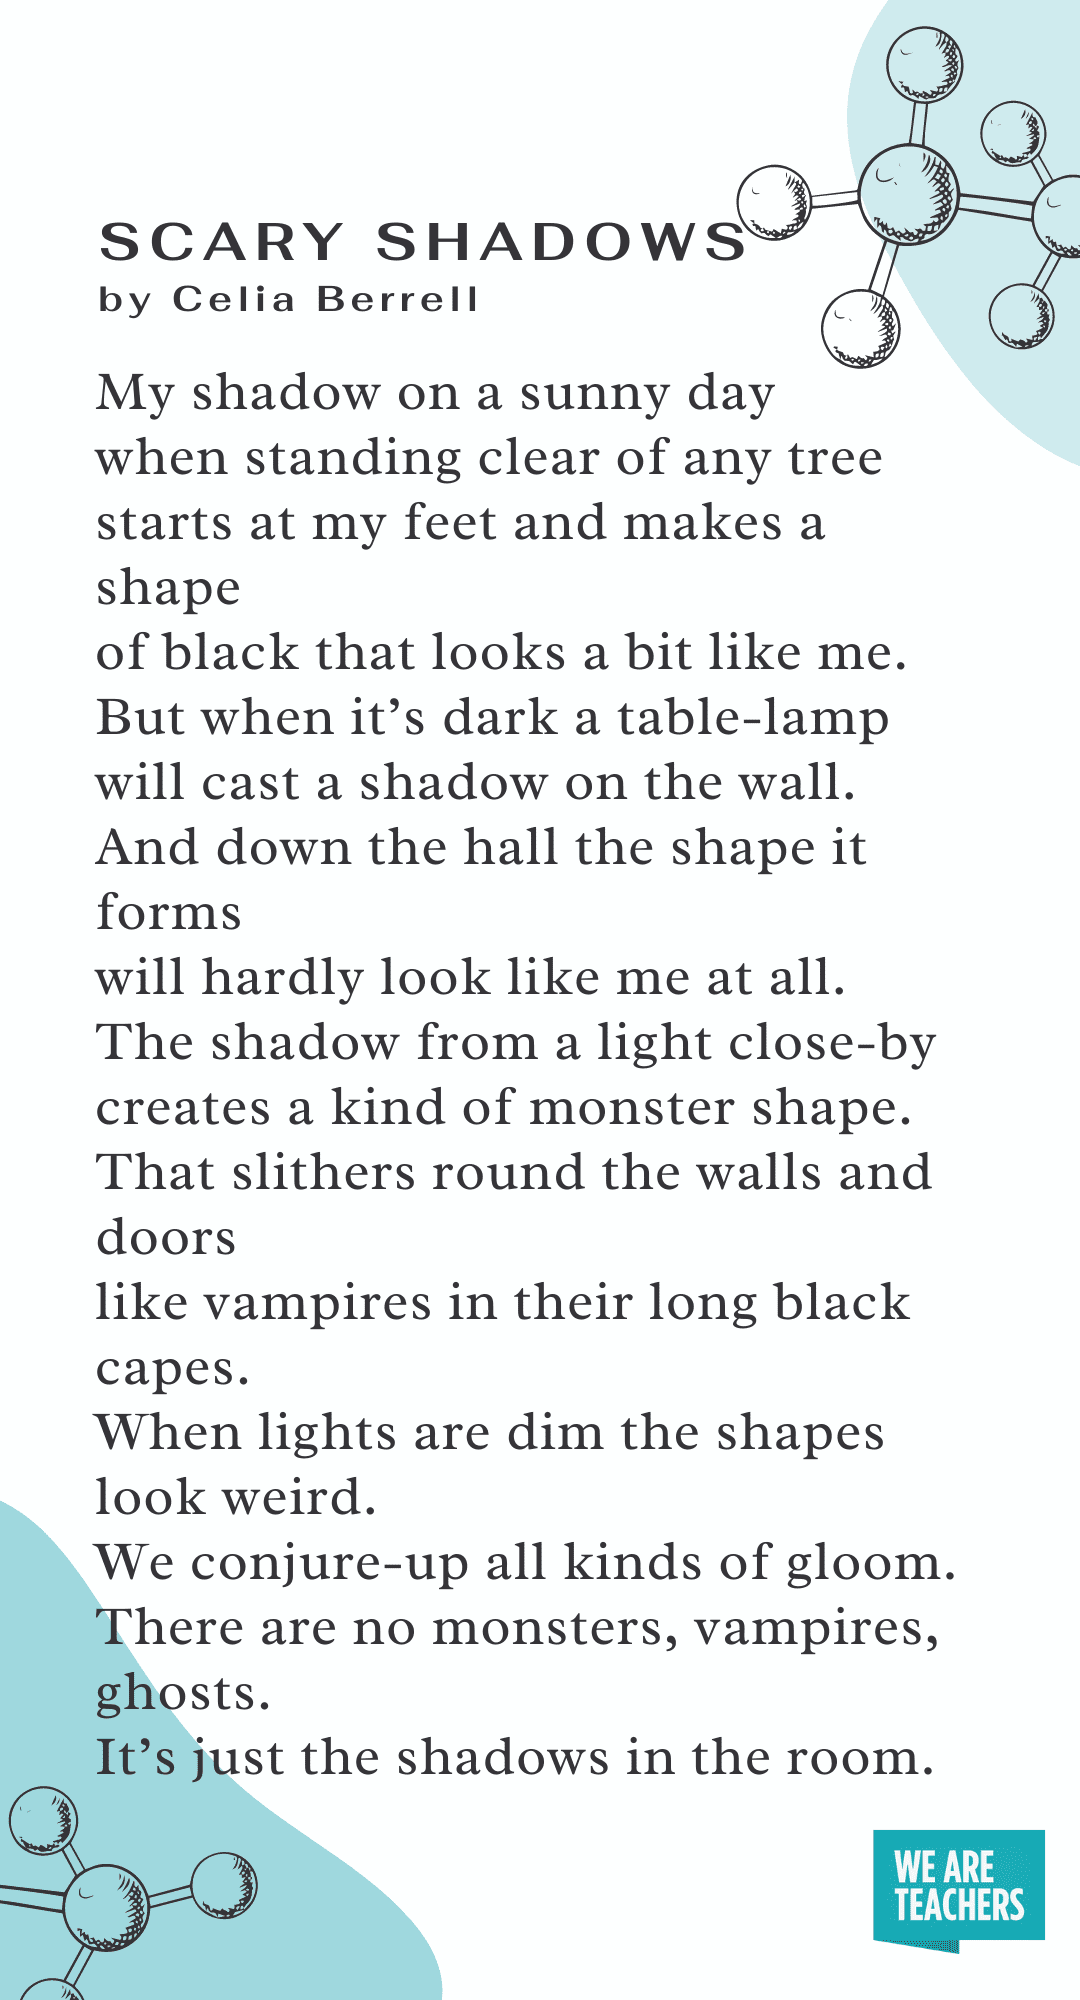 Scary Shadows by Celia Berrell